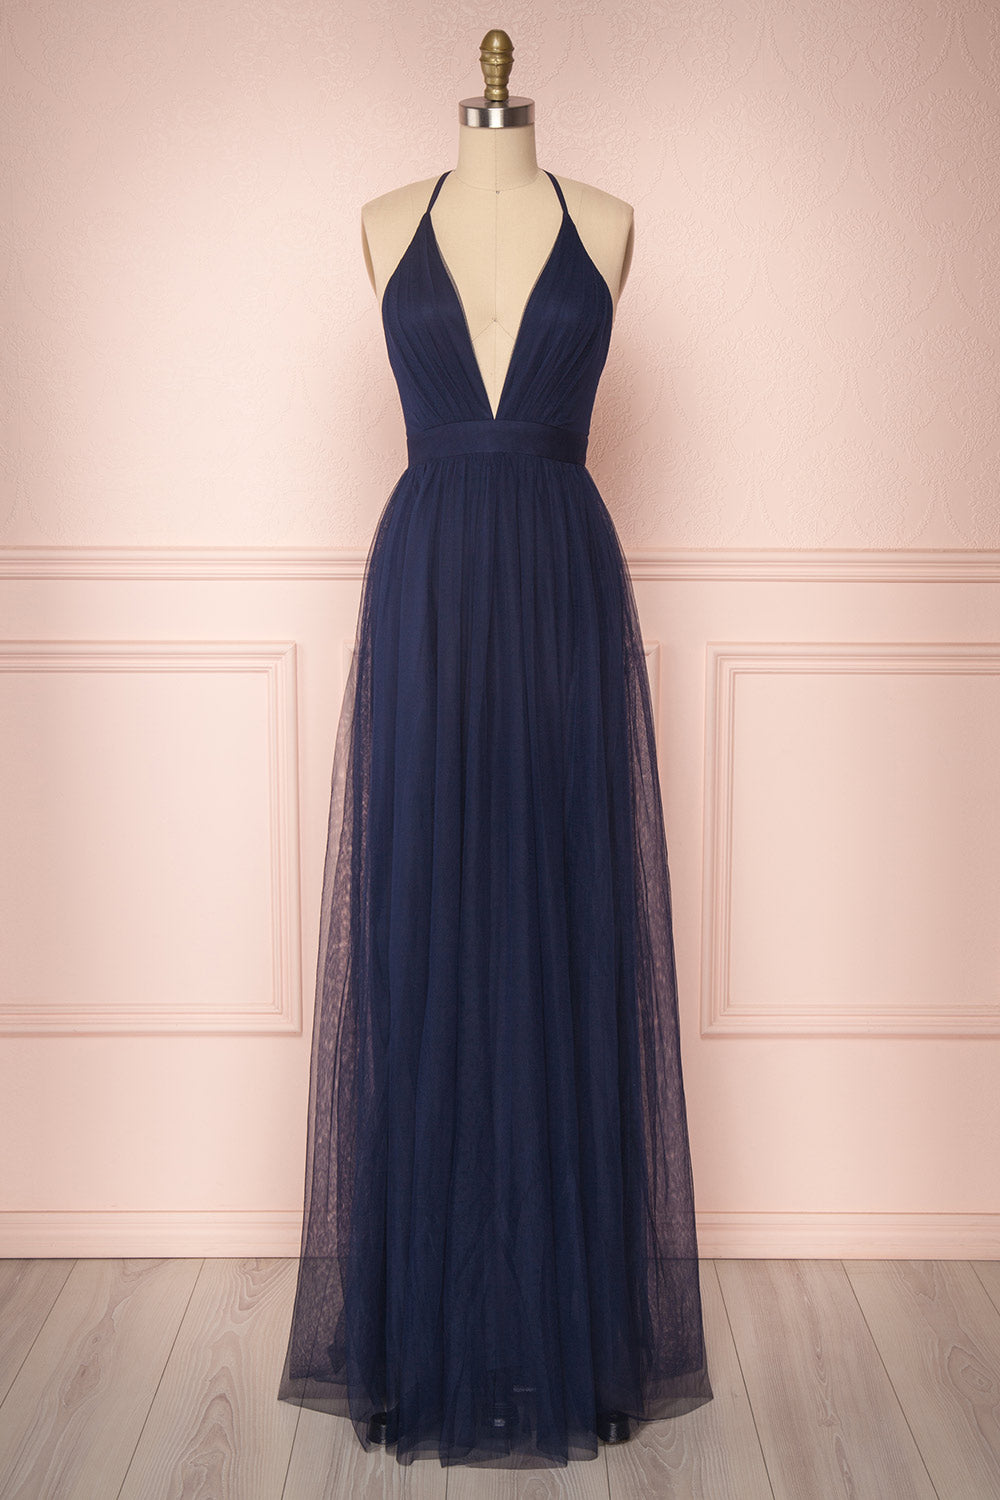 Aliki Midnight Dark Blue Mesh Maxi Dress | Boutique 1861 1